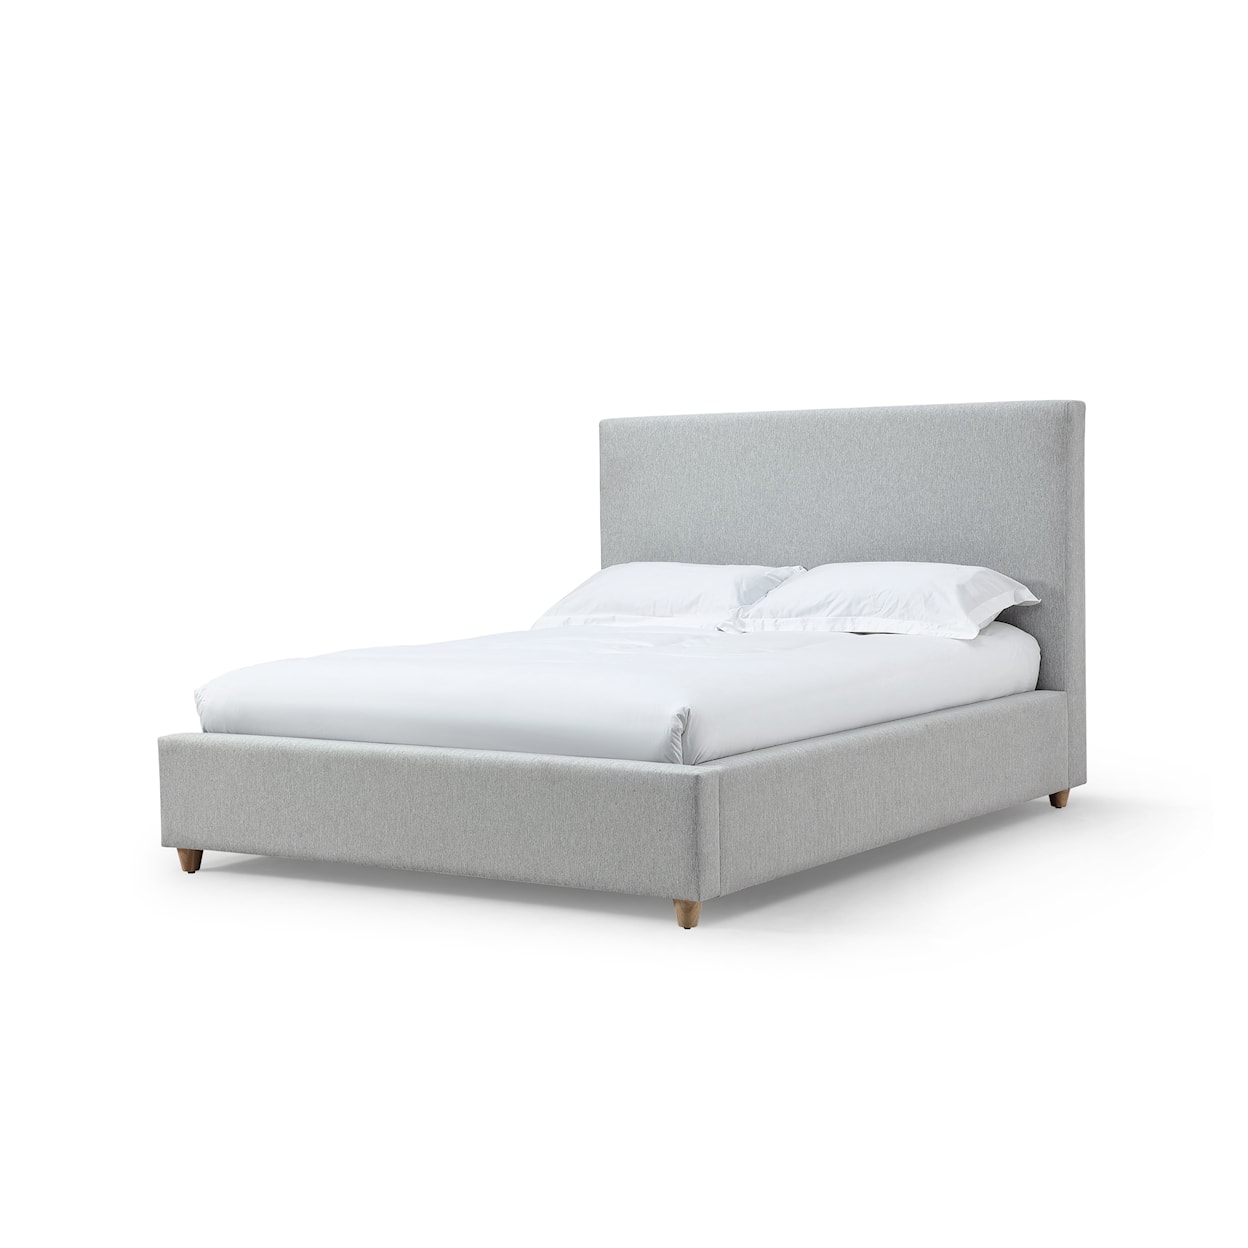 Modus International Olivia Full Upholstered Platform Bed